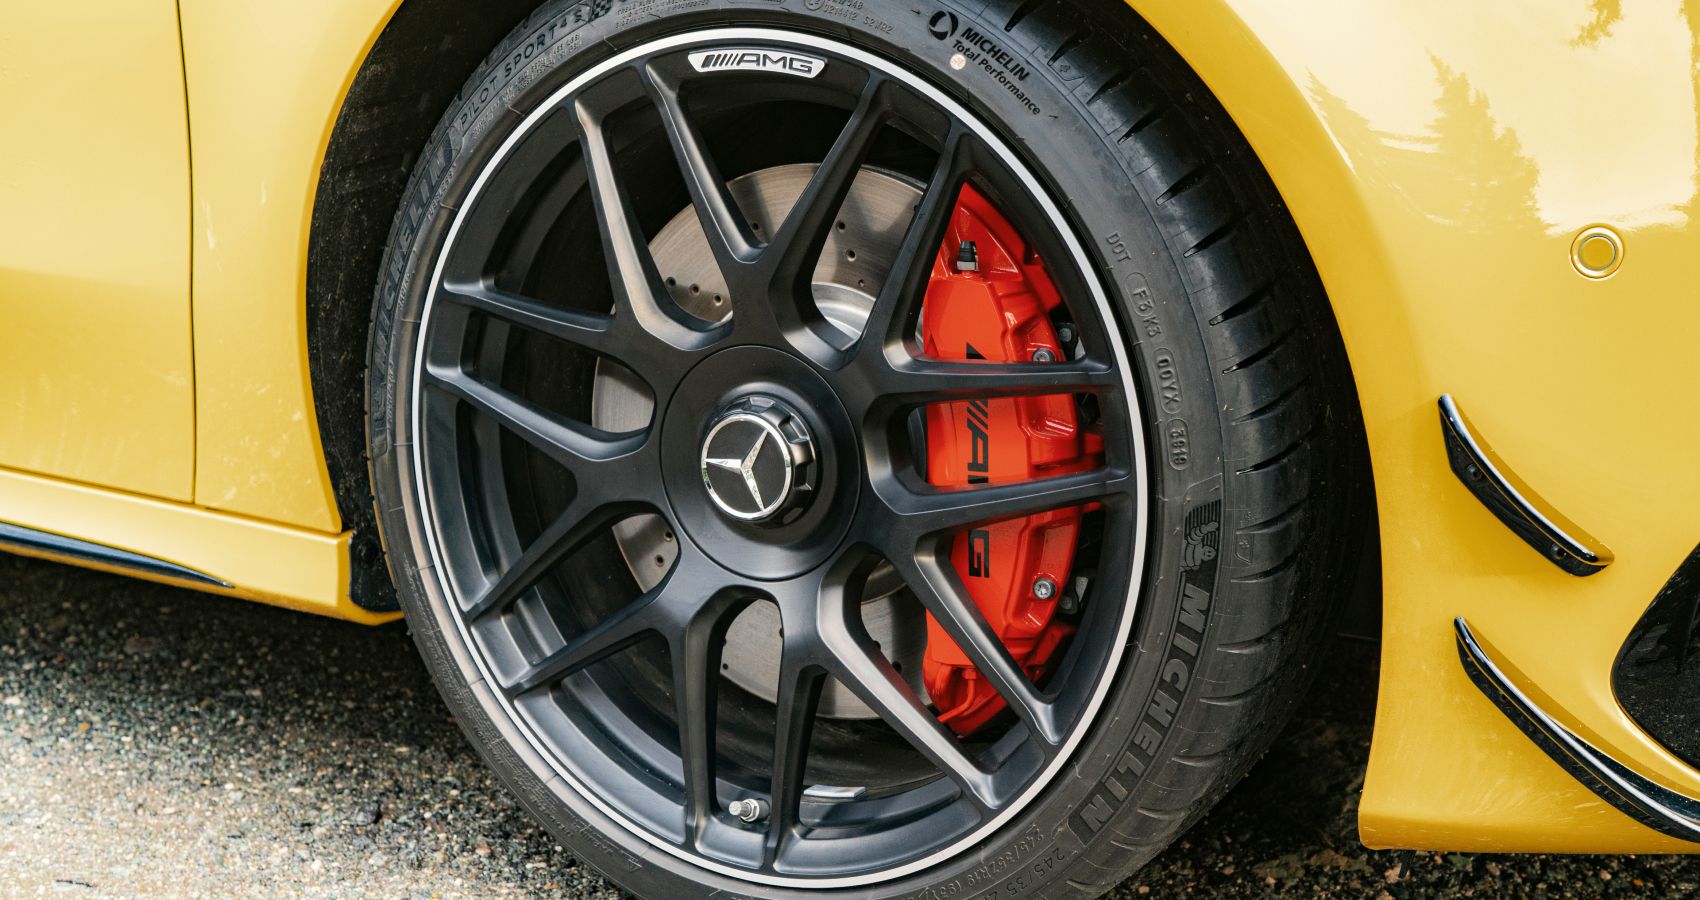 Mercedes-AMG A45 S High-Performance AMG Brakes